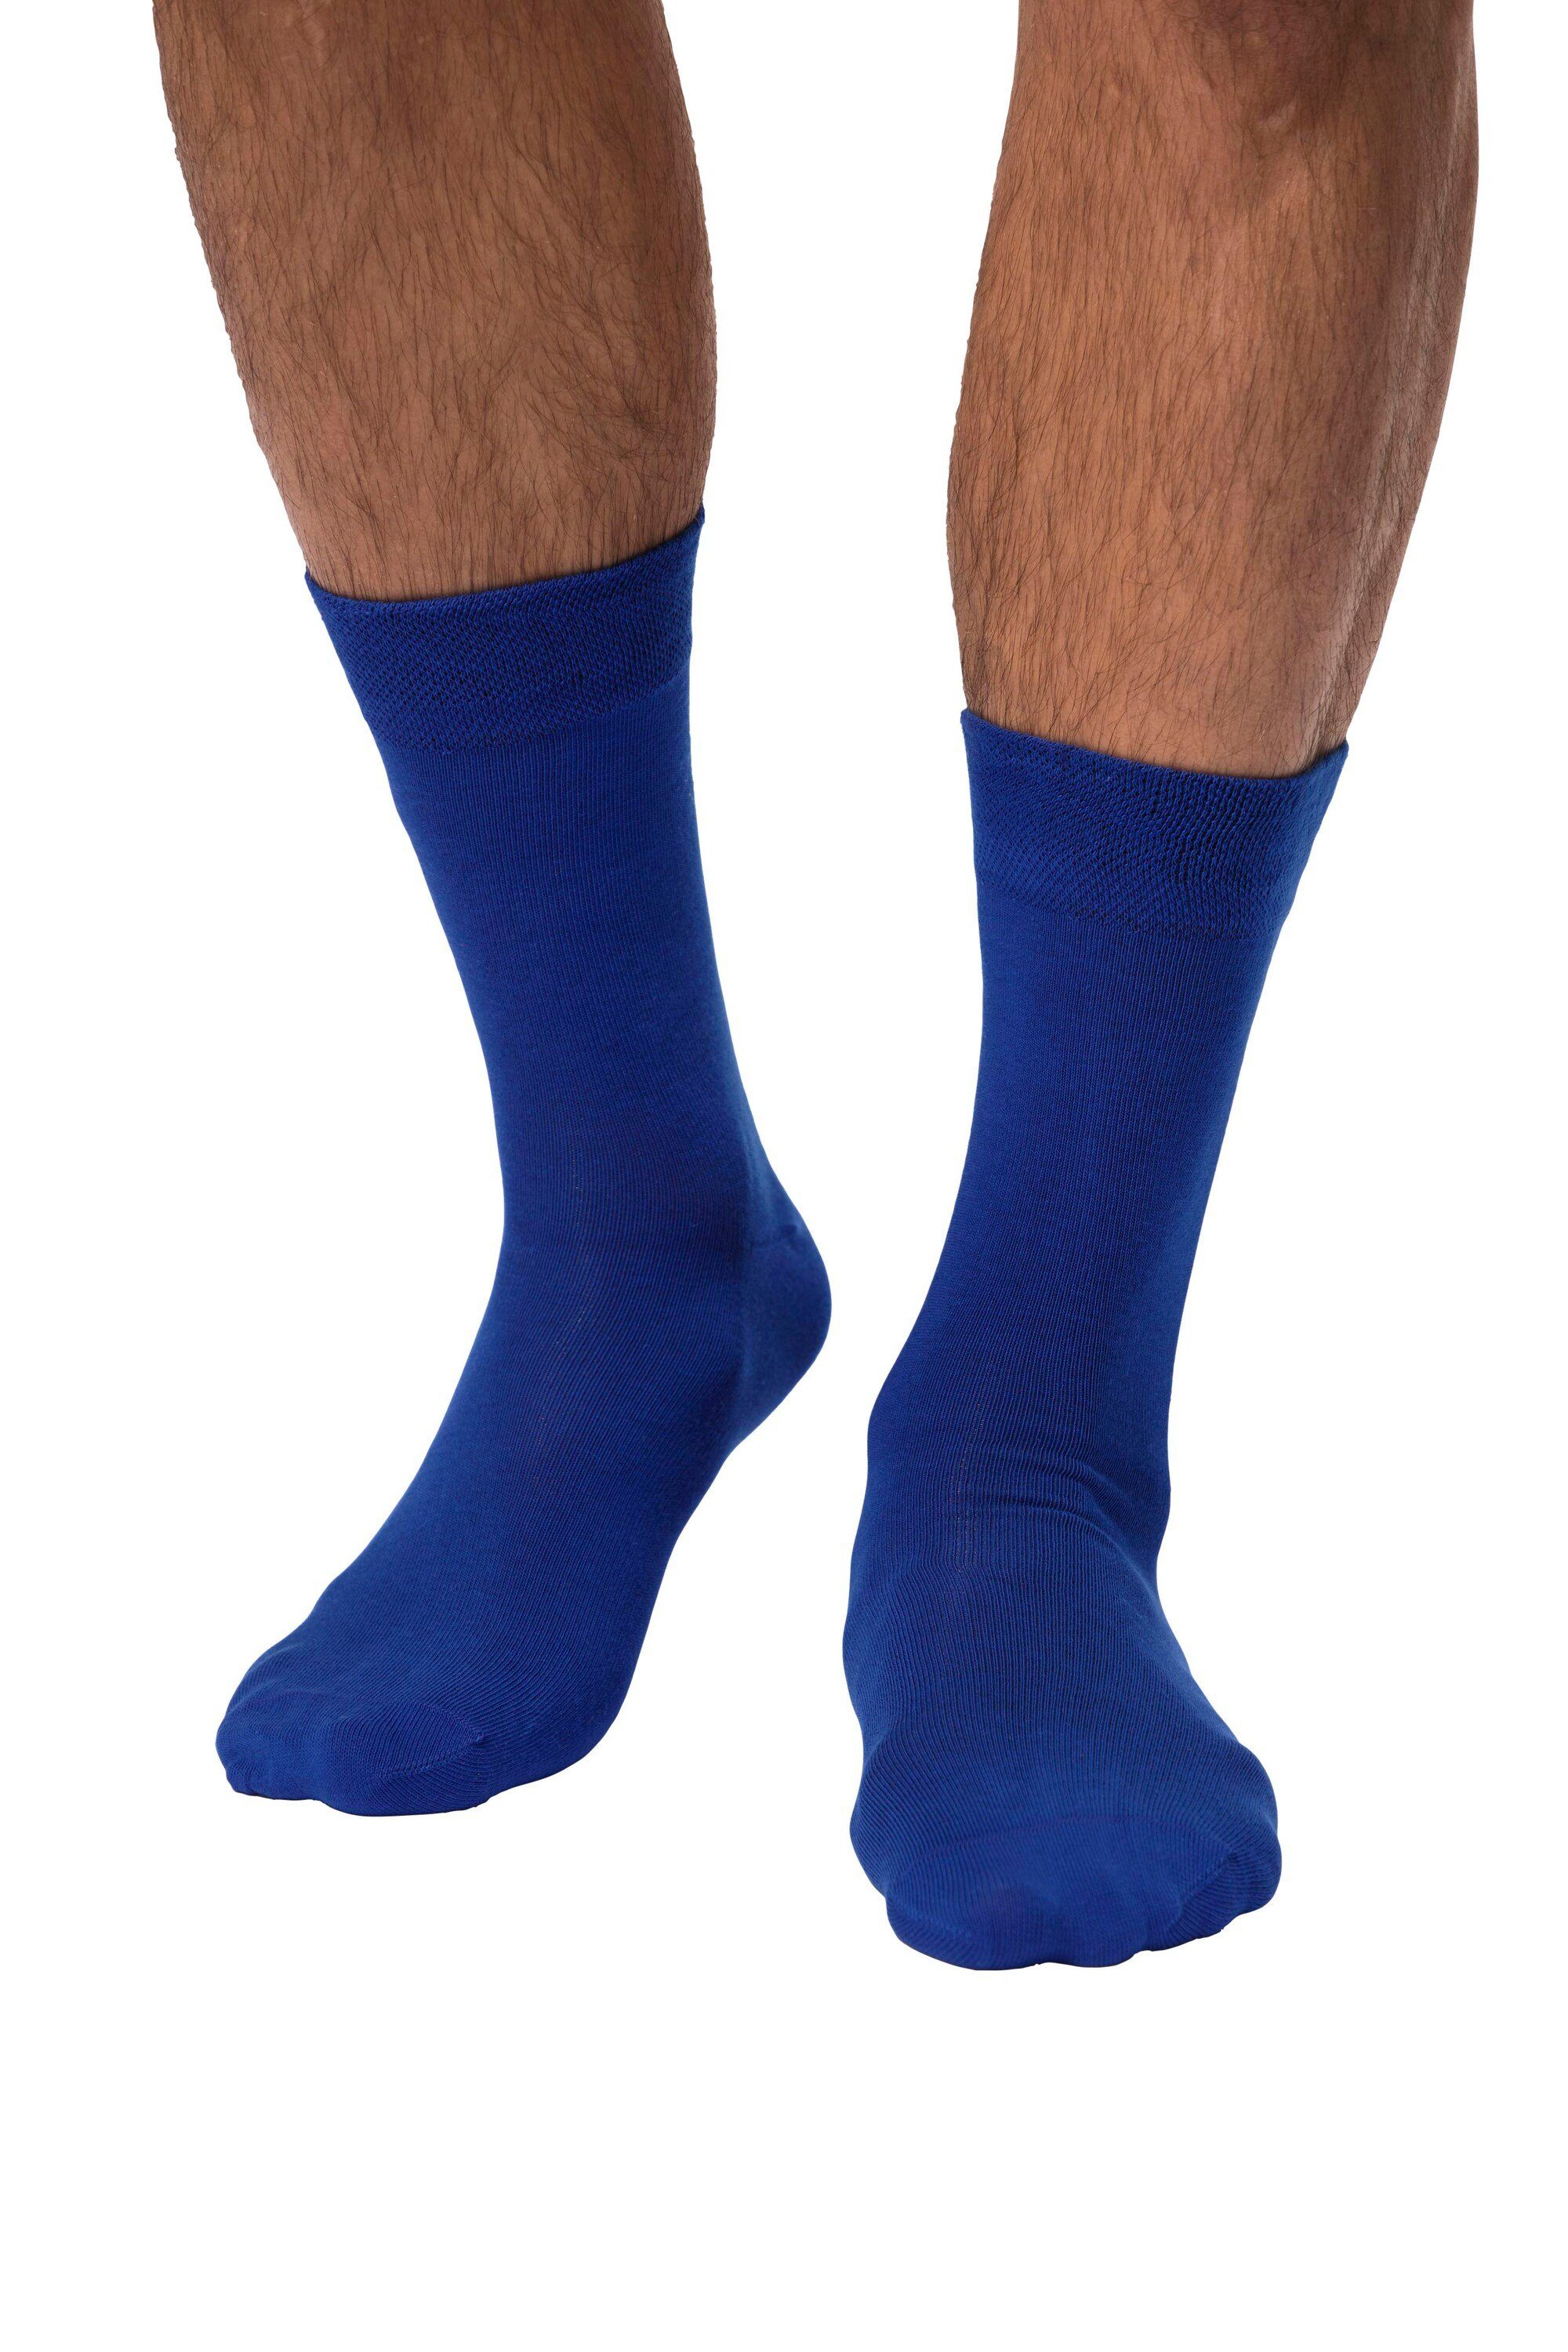 Socken JP1880 Basicsocken kobalt Komfort-Bündchen blau 2er-Pack (2-Paar)